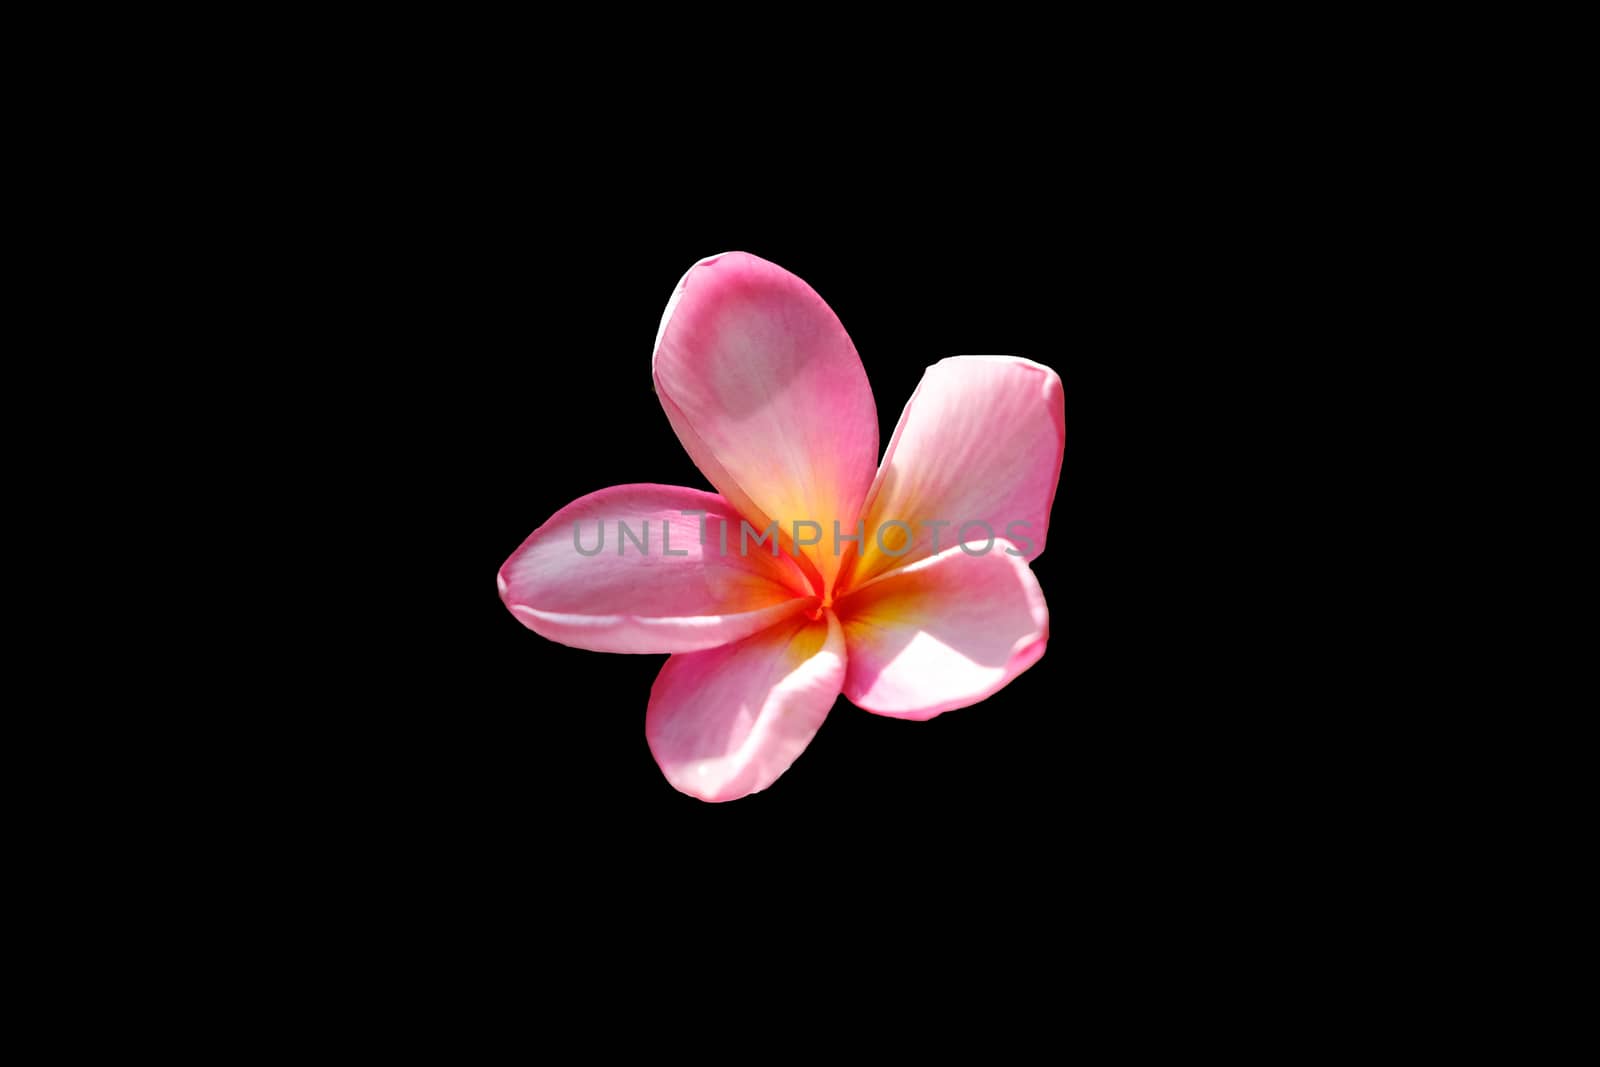 Cluseup head shot of pink frangipani flower isolated on black background. Image photo